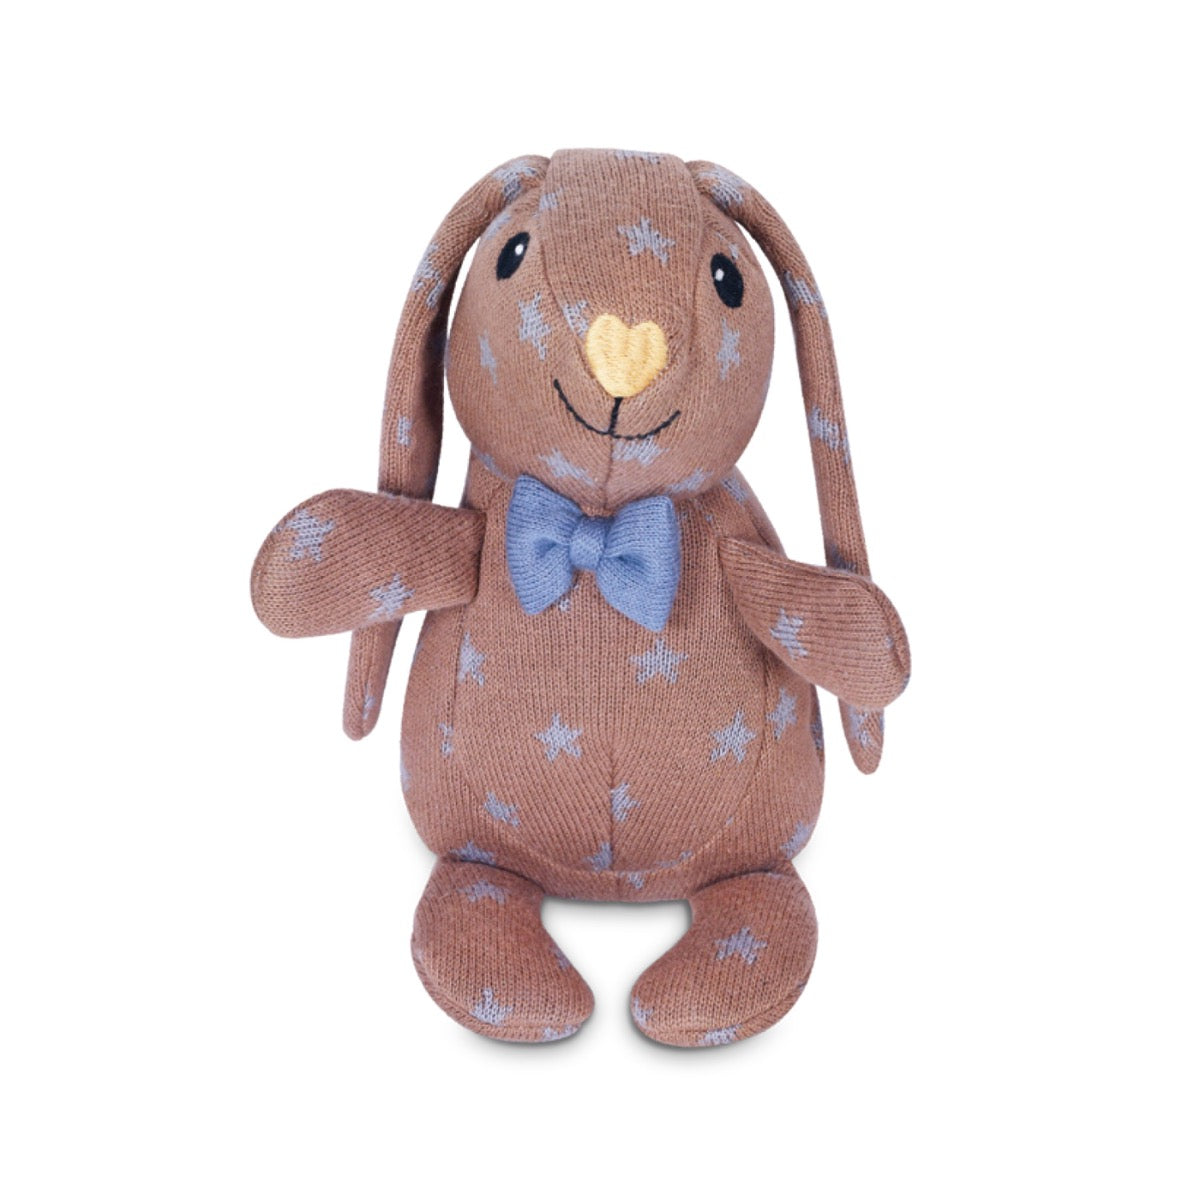 Knit Patterned Bunny Plush - Duke